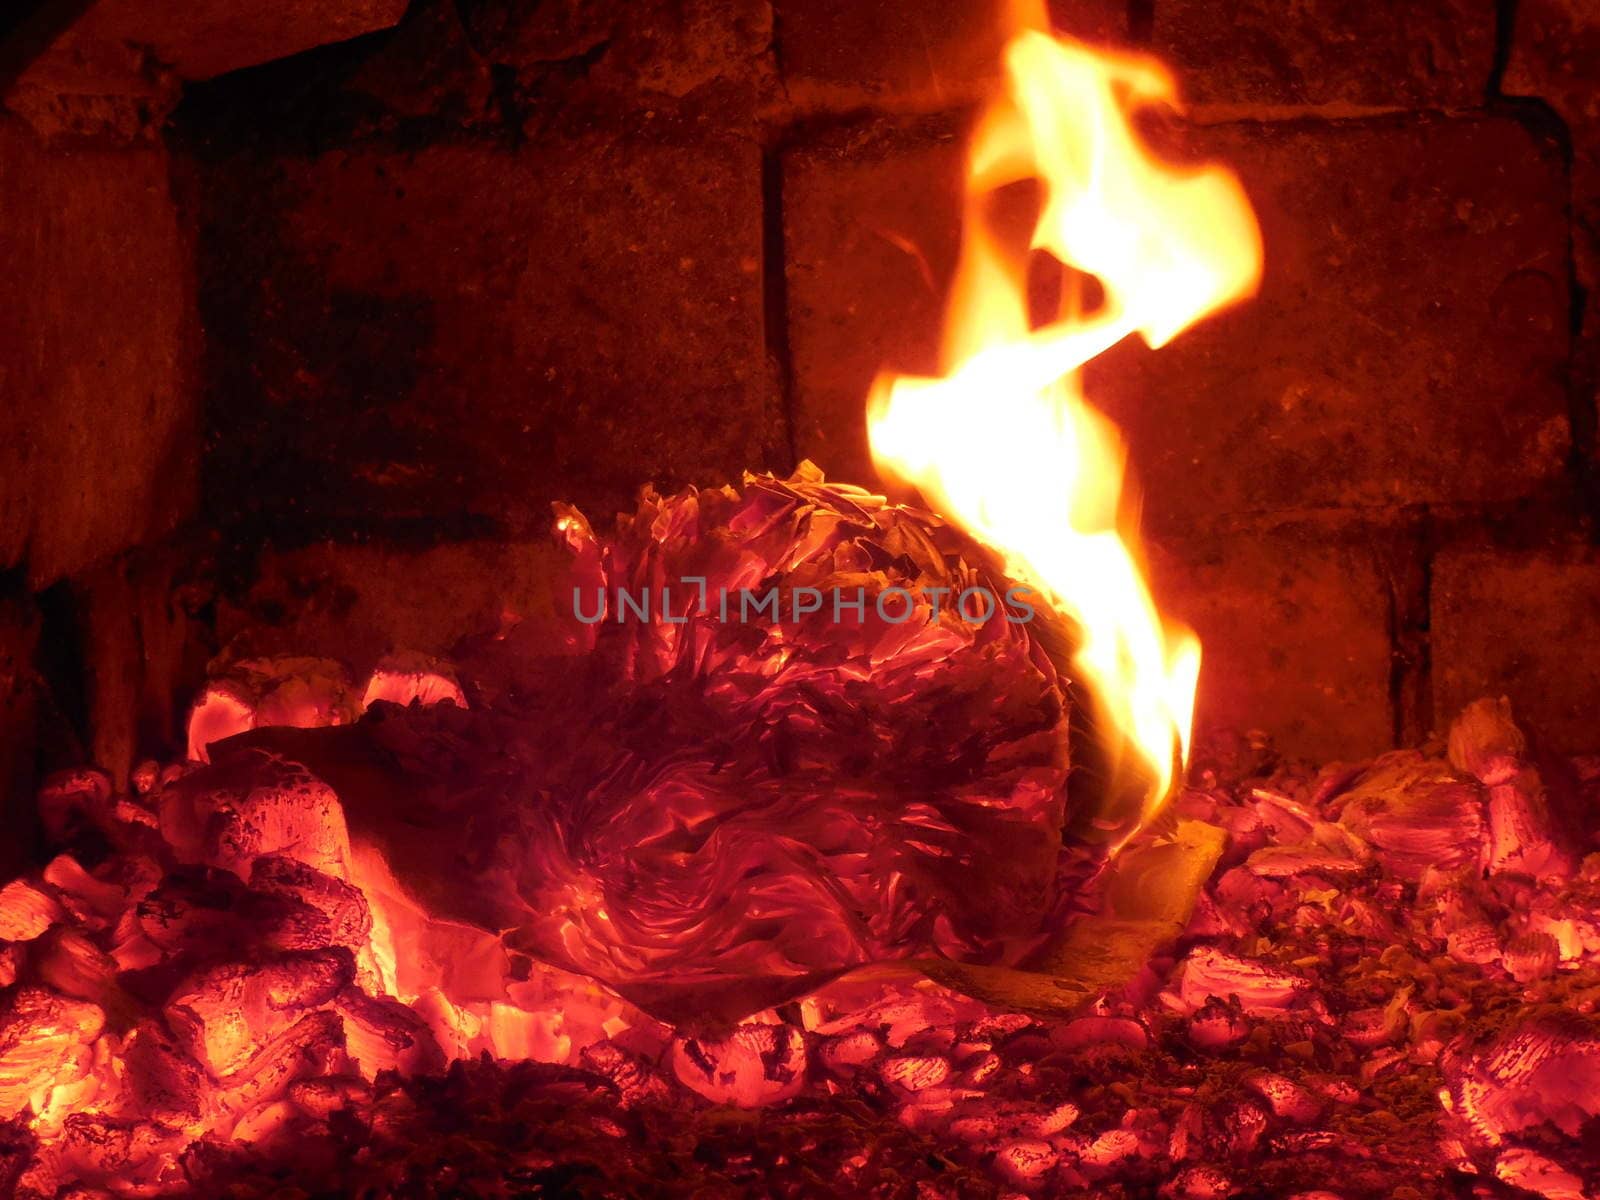 the burning of the diary in the Russian stove, February, Karelia, 2015. by olga_ovchinnikova